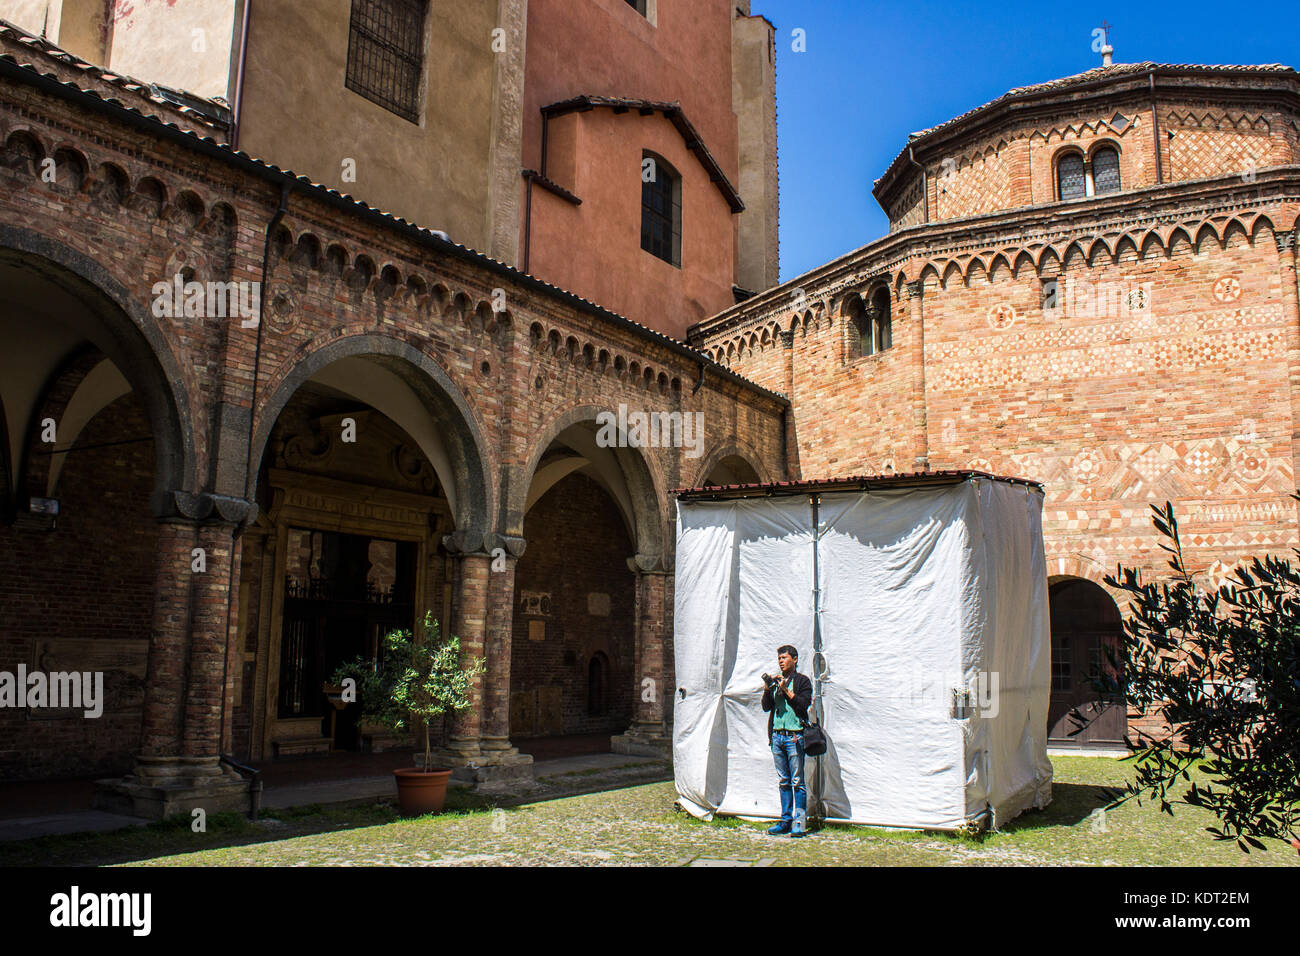 The Basilica Di Santo Stefano And The Sette Chiese In Bologna Italy Stock Photo Alamy